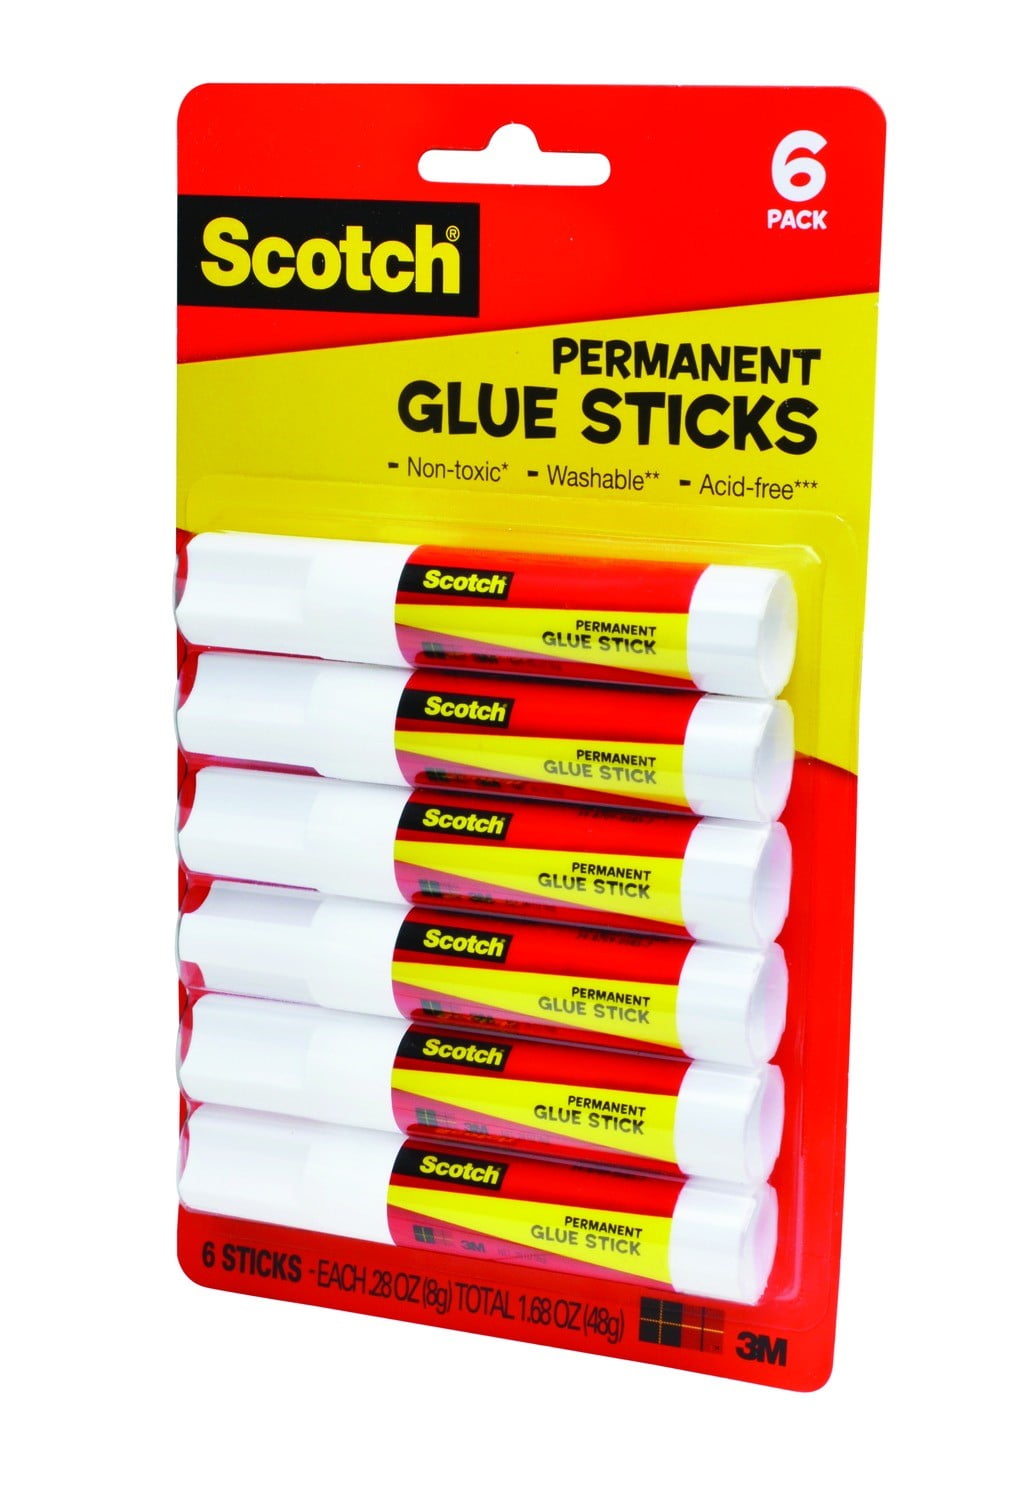 Scotch® Permanent Glue Stick, Display of 20 Sticks, 21g